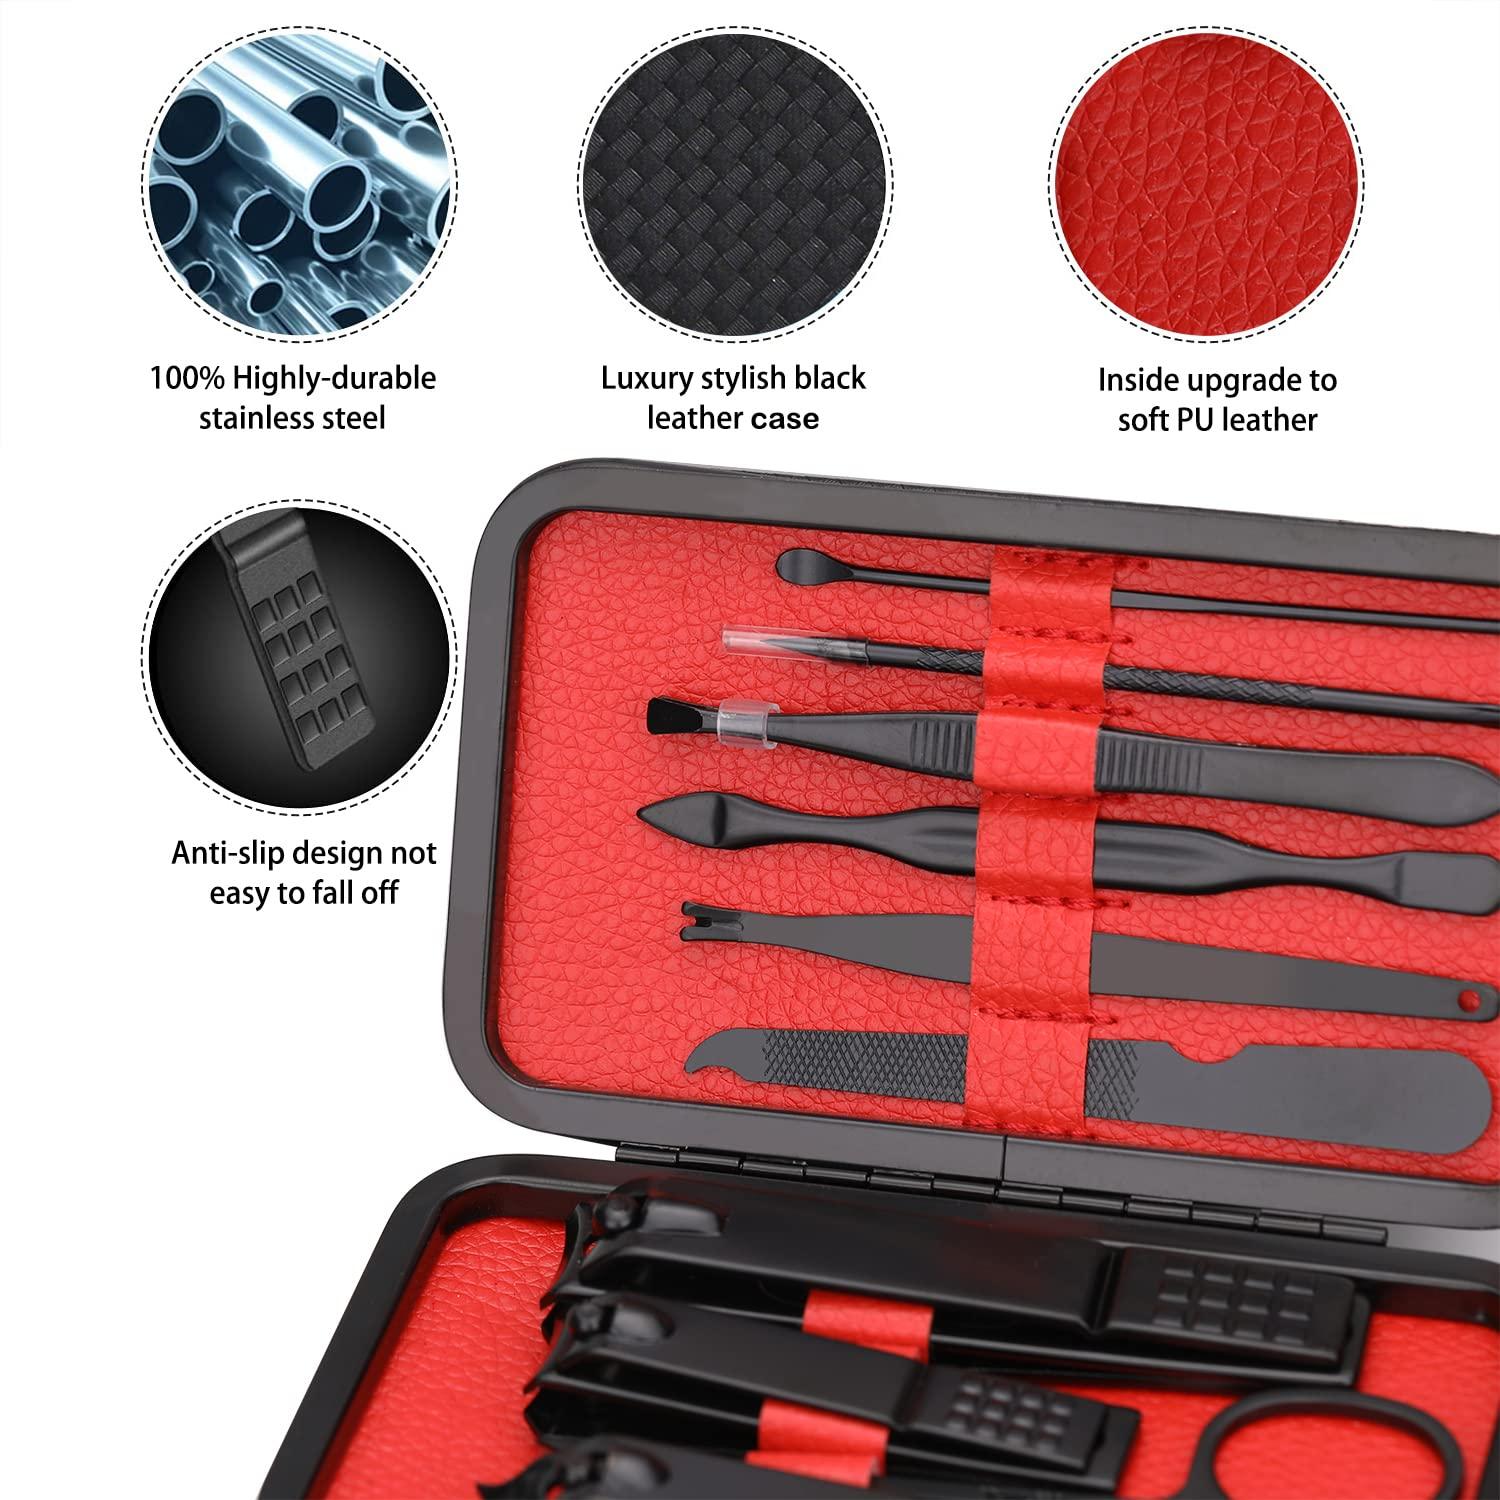 Best Black Leather Repair Kits - Top 7 Black Leather Repair Kits